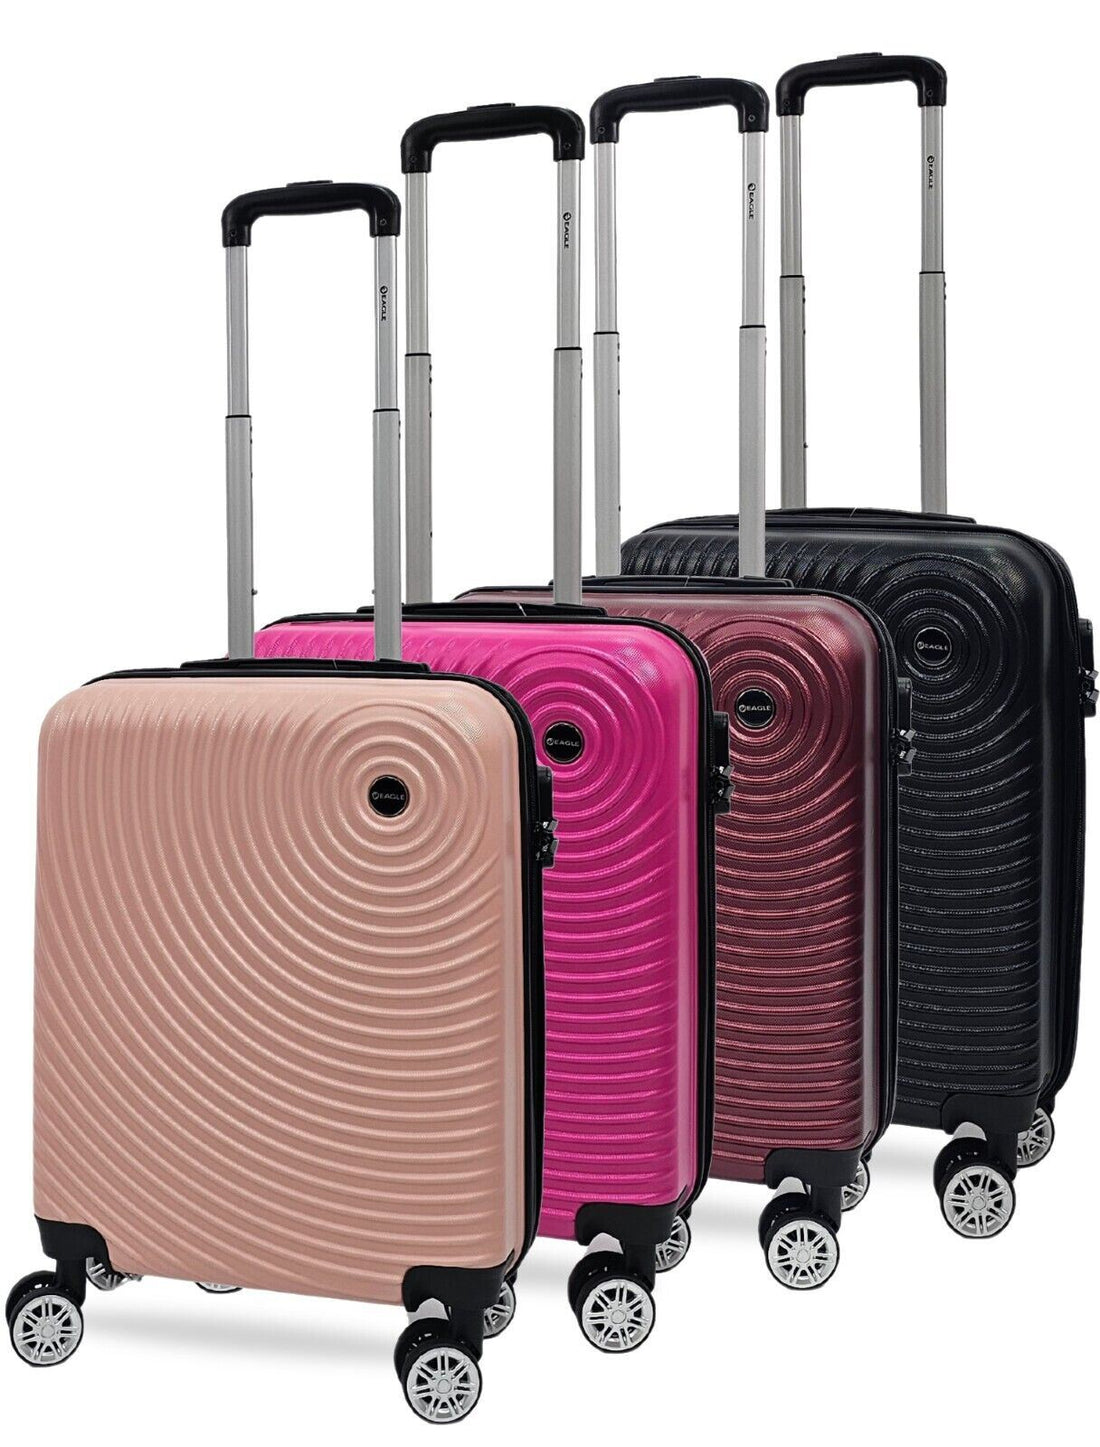 Hard Shell Cabin 8 Wheel Luggage Case Travel Bag - Upperclass Fashions 